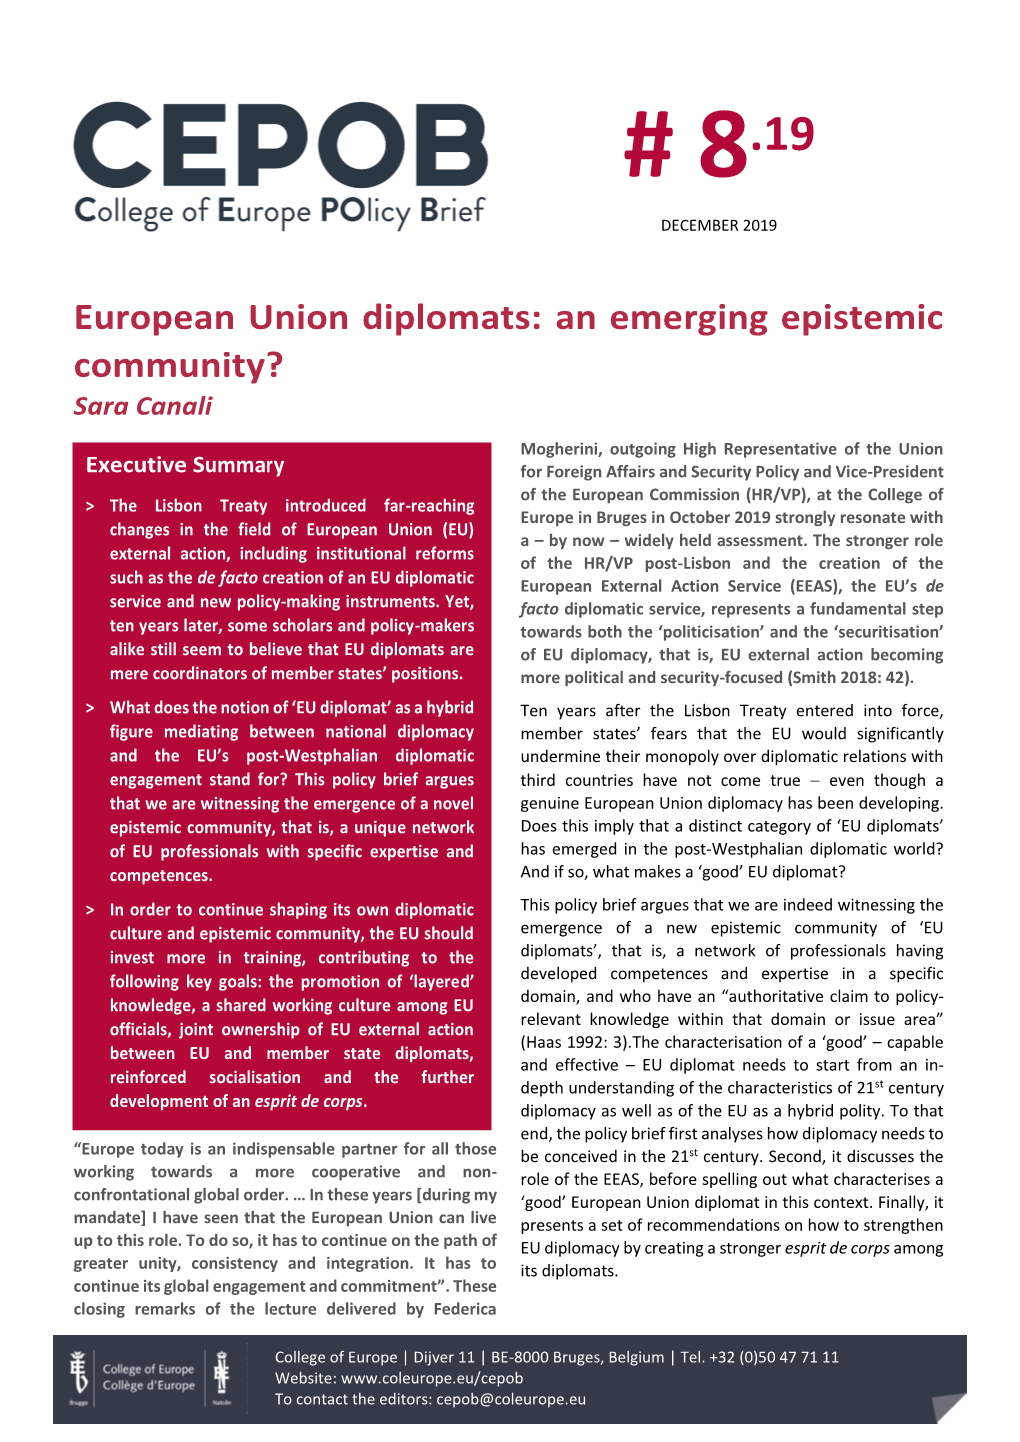 European Union Diplomats: an Emerging Epistemic Community? Sara Canali